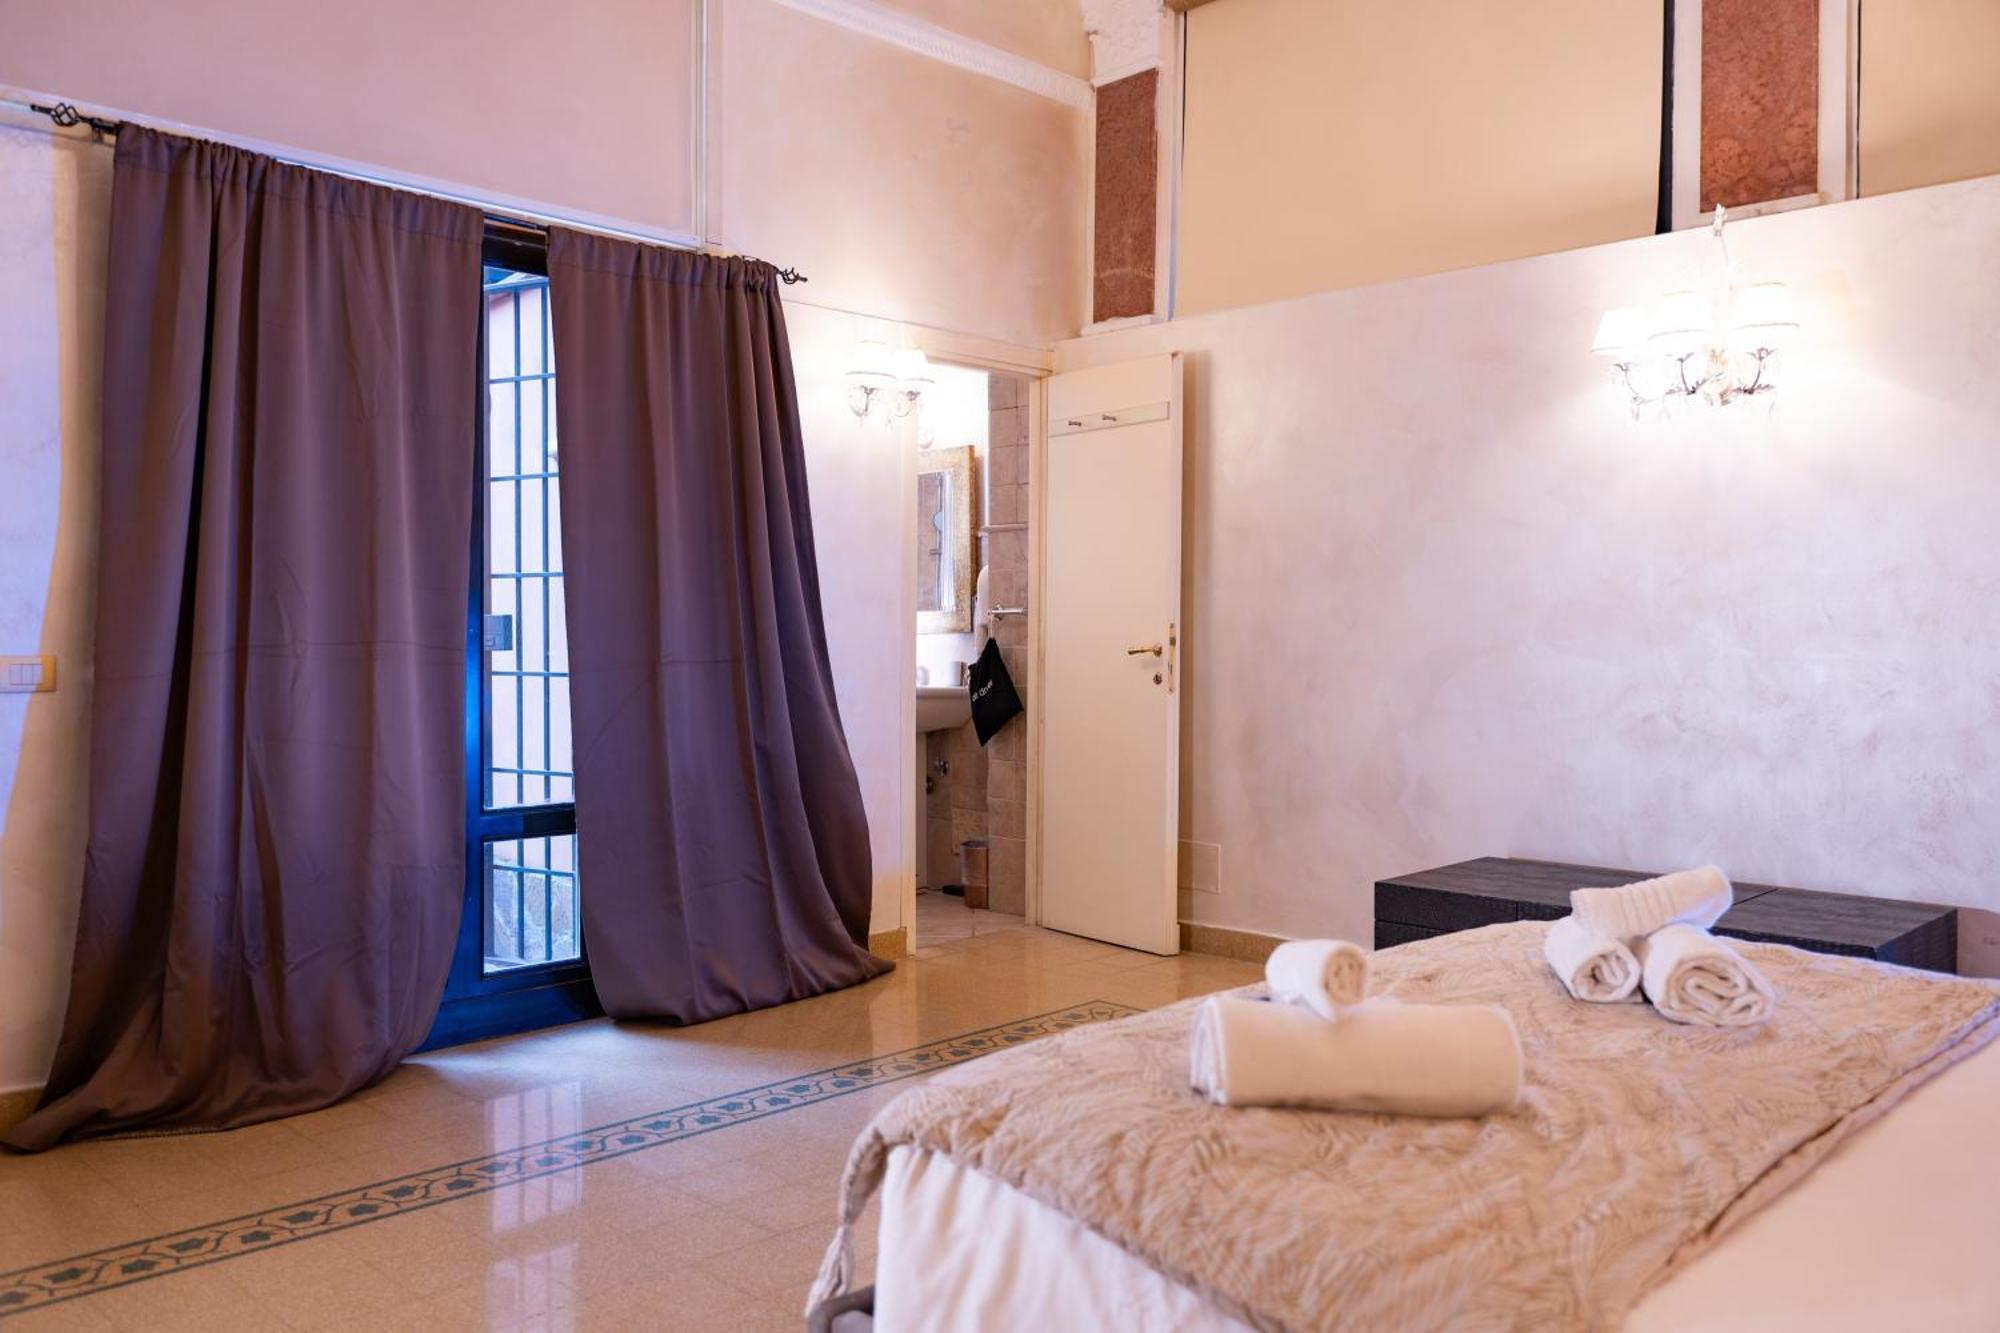 Contessa Arrivabene Antica Dimora Bed & Breakfast Rome Luaran gambar